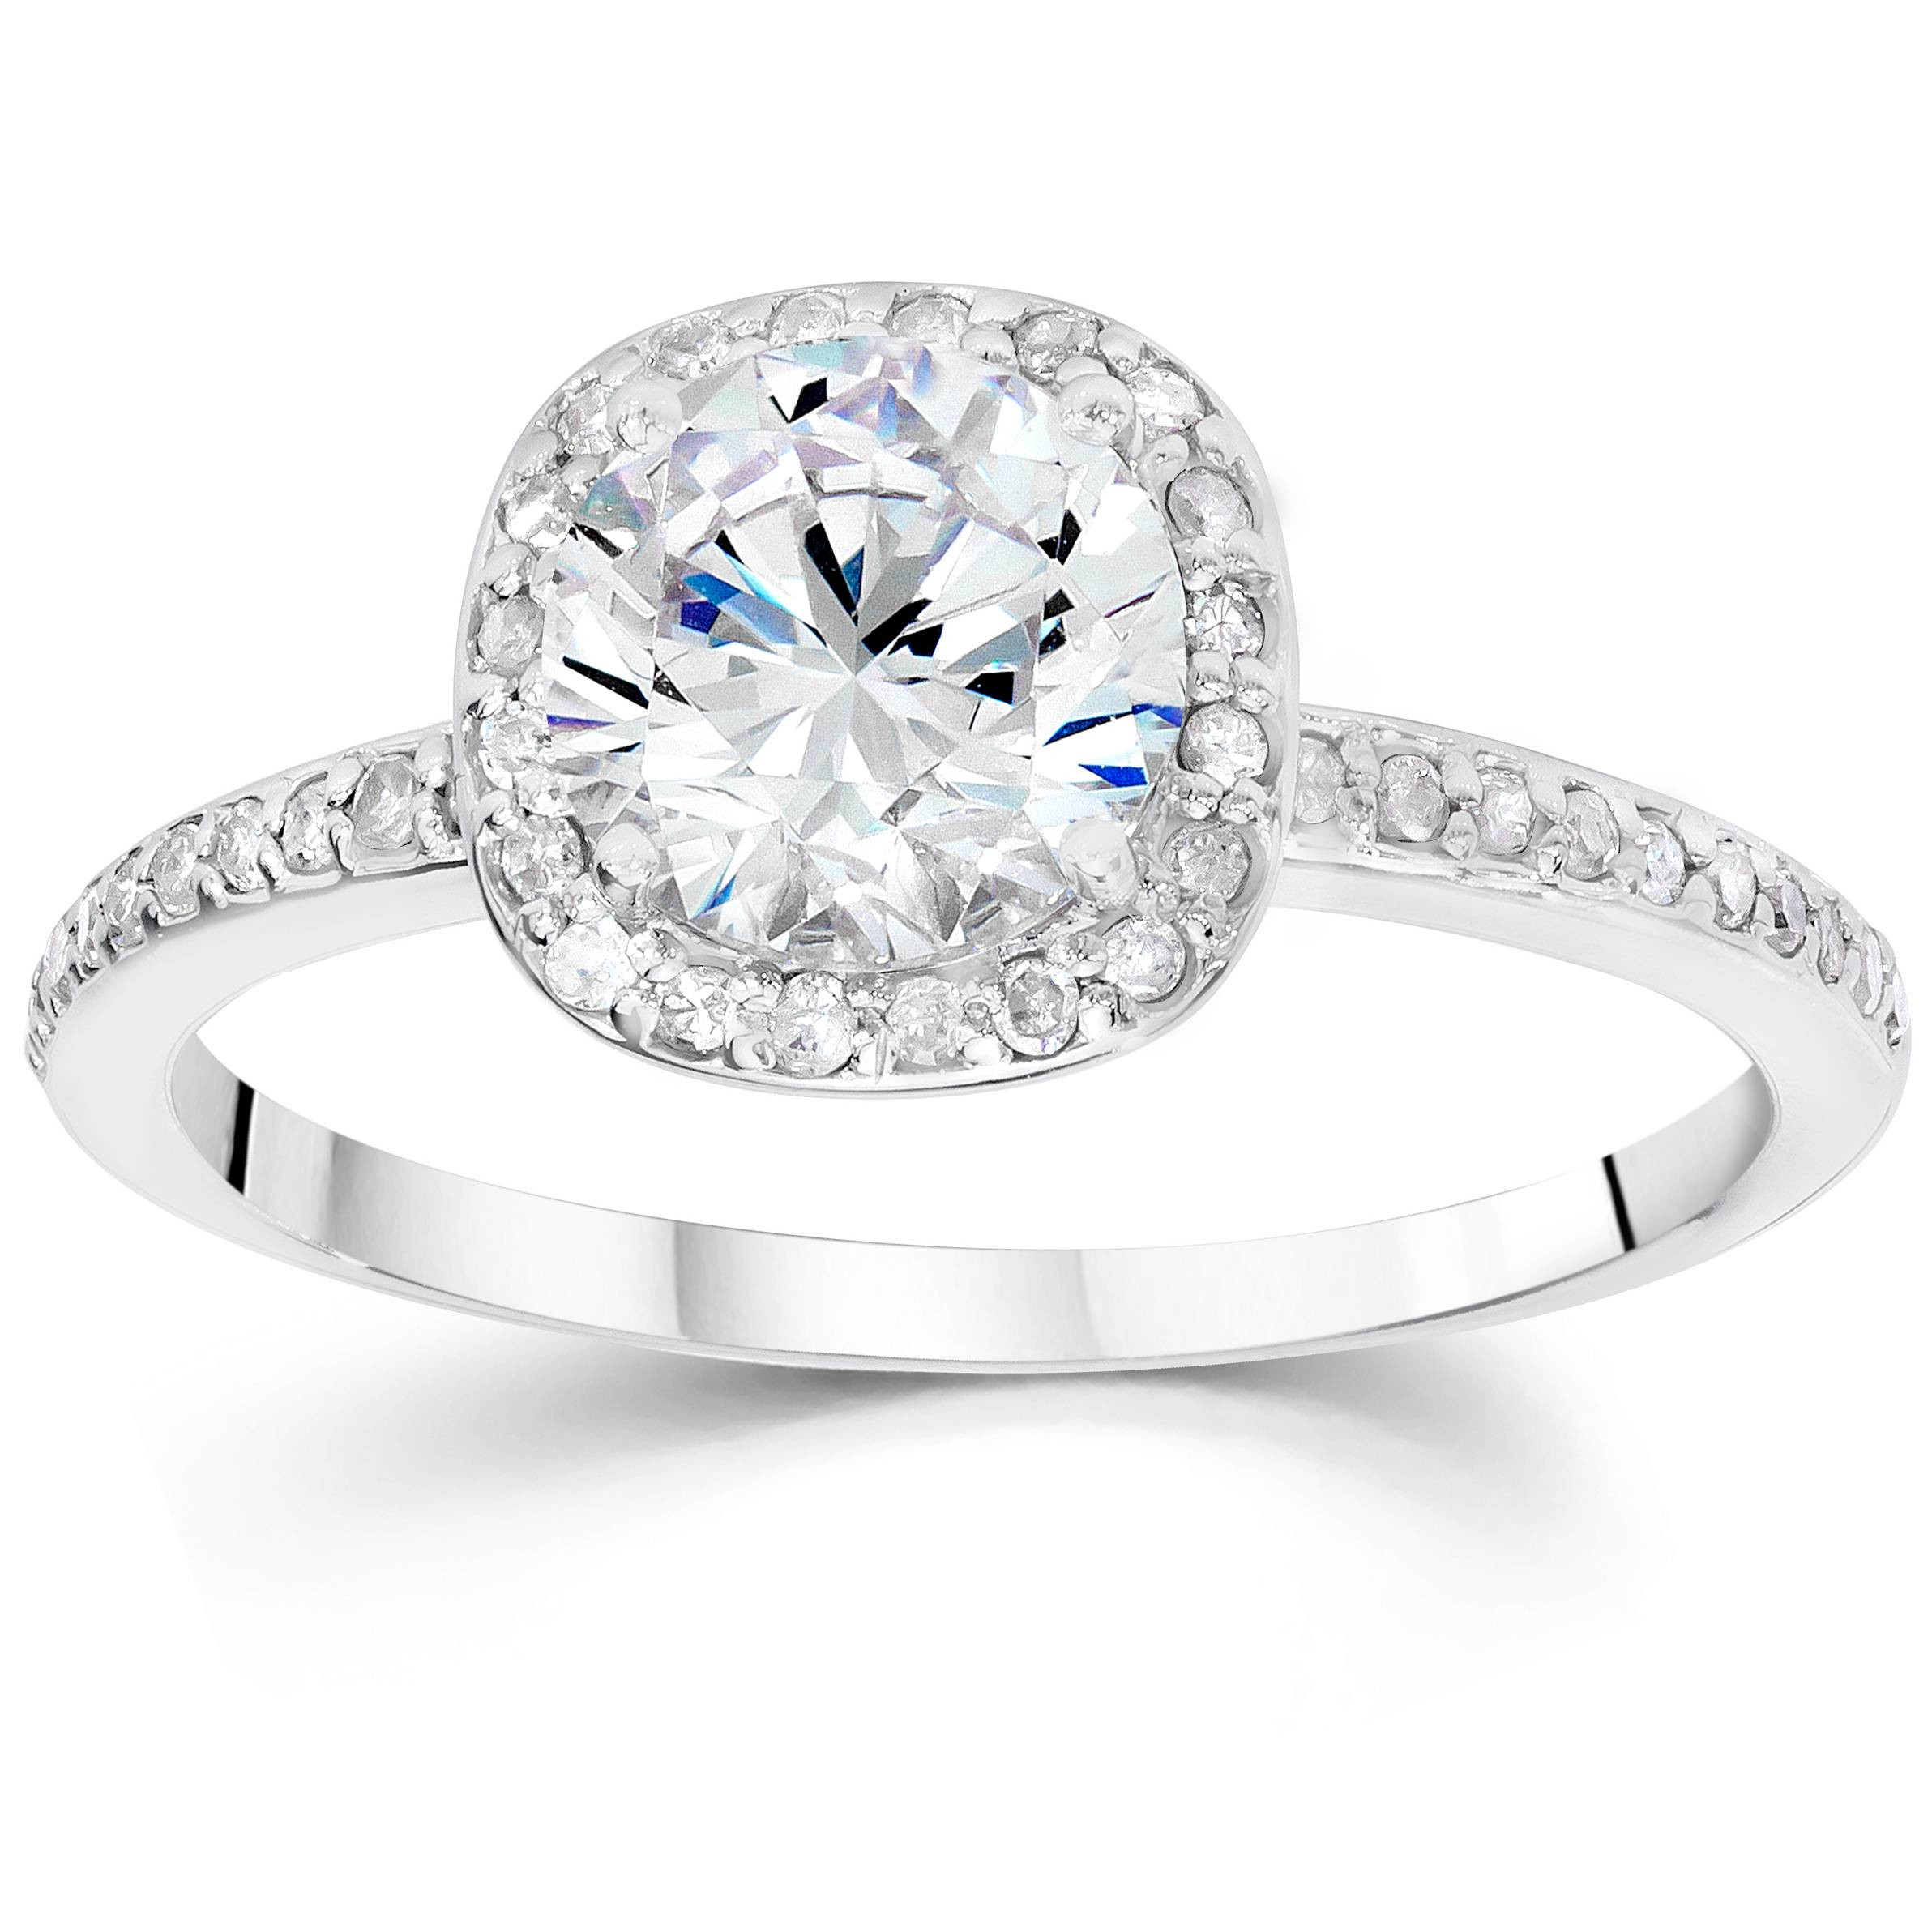 Round Diamond Engagement Rings
 5 8ct Cushion Halo Diamond Engagement Ring 14K White Gold